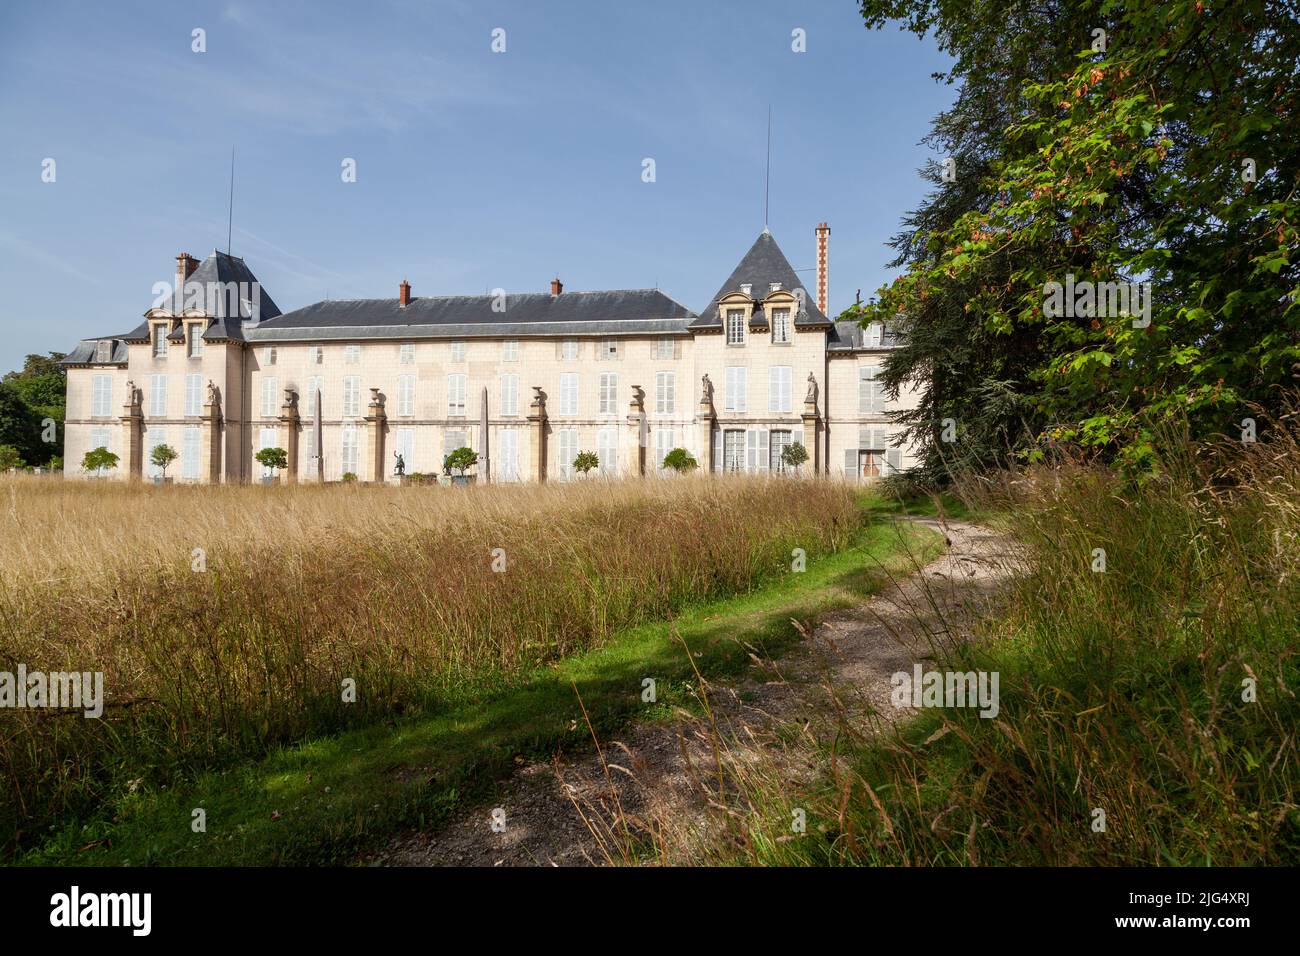 Château de Malmaison n the commune of Rueil-Malmaison. France. Stock Photo